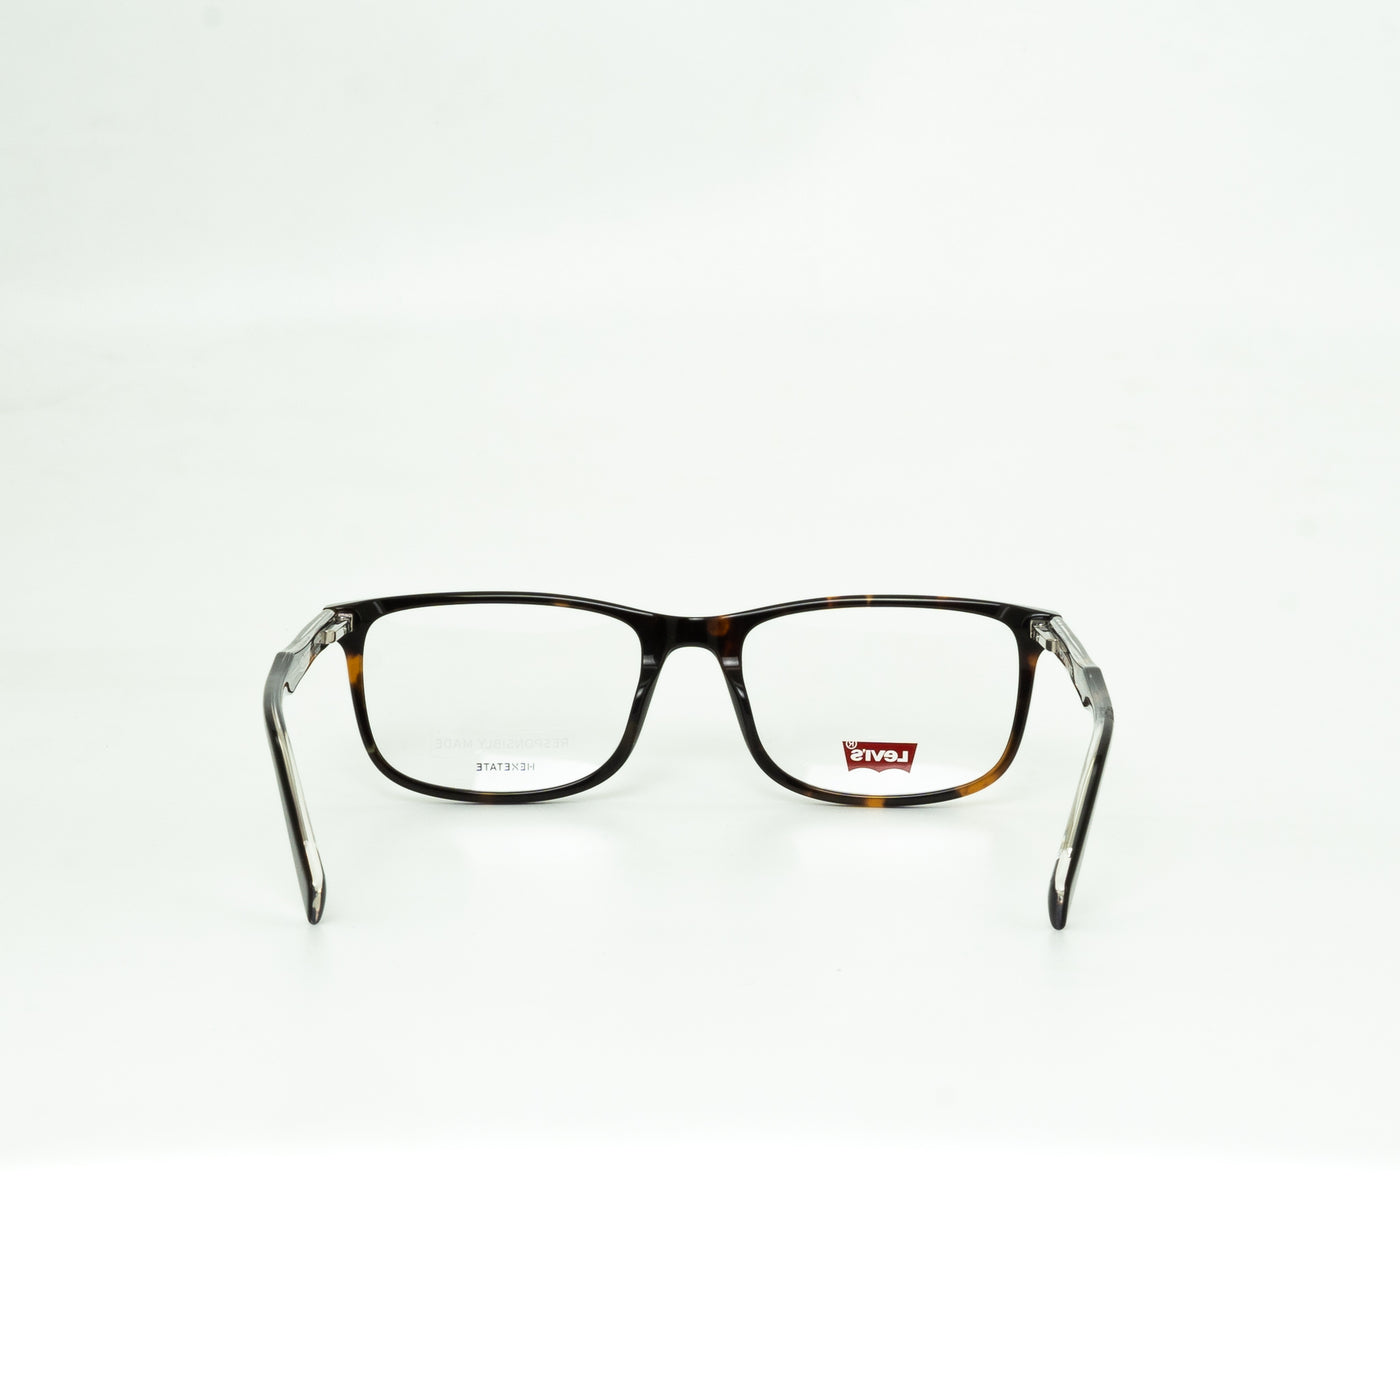 Levis LS502708656 | Eyeglasses - Vision Express Optical Philippines